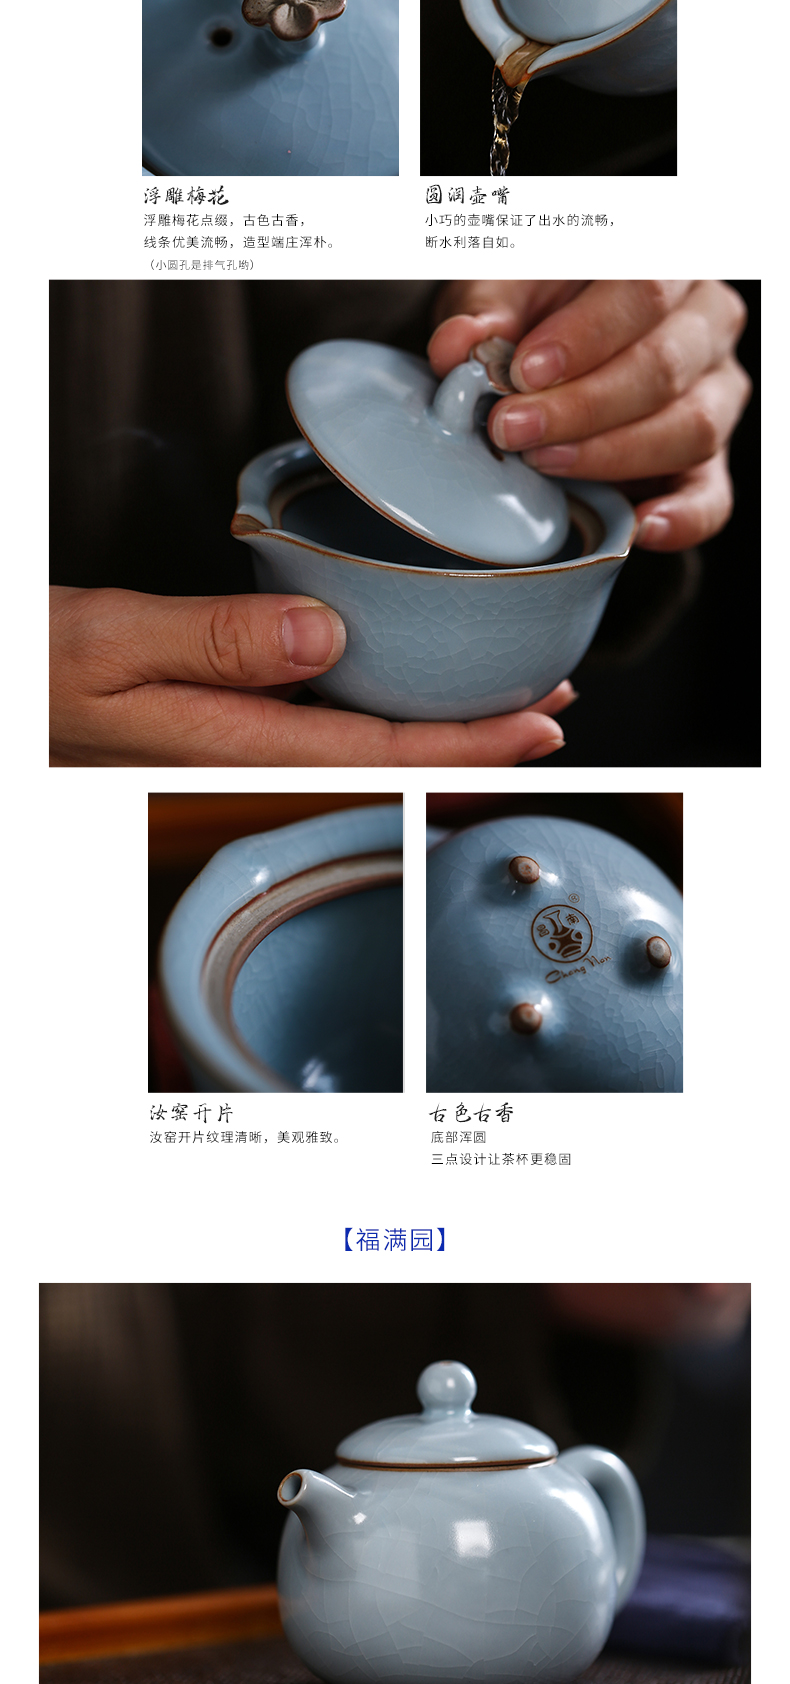 Chang south your up pot of tea mercifully kung fu tea teapot slicing can raise your porcelain undressed ore kung fu xi shi pot teapot